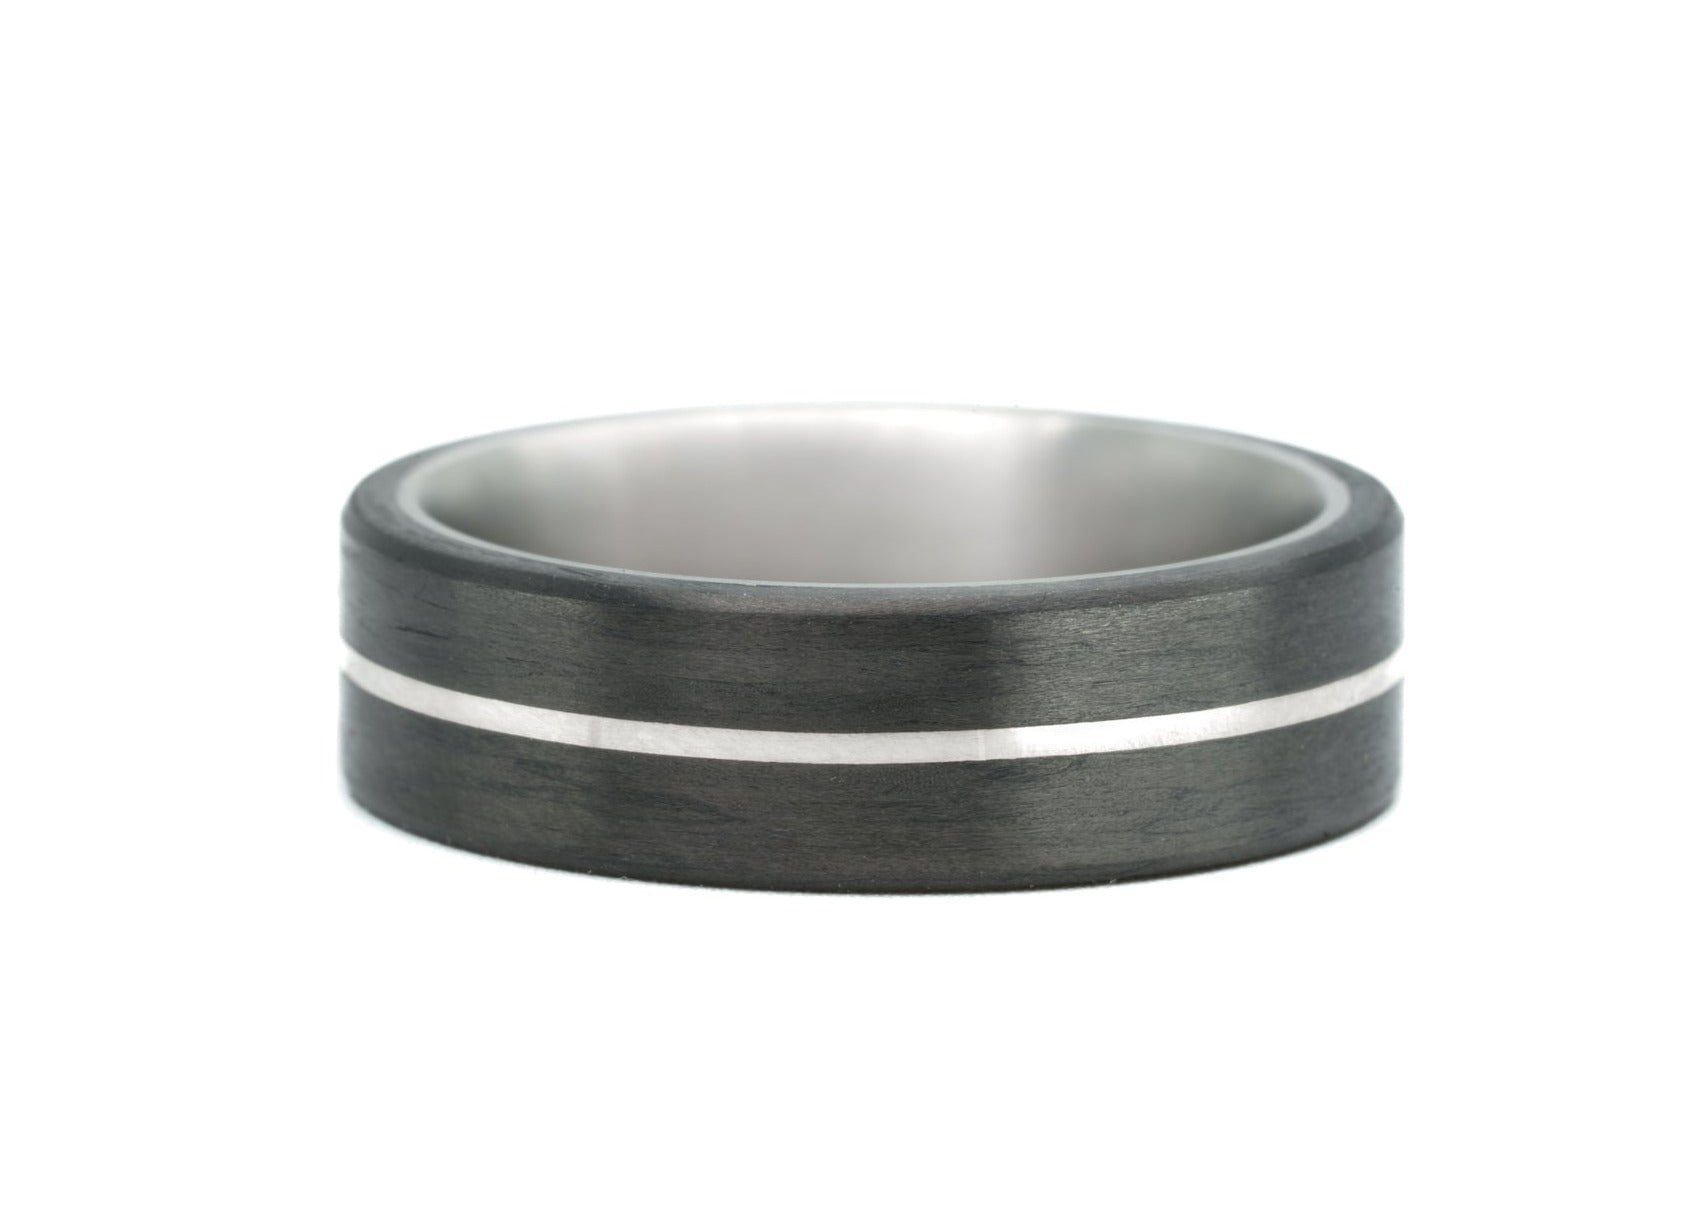 The Wyndom Carbon & Titanium Ring Rings 